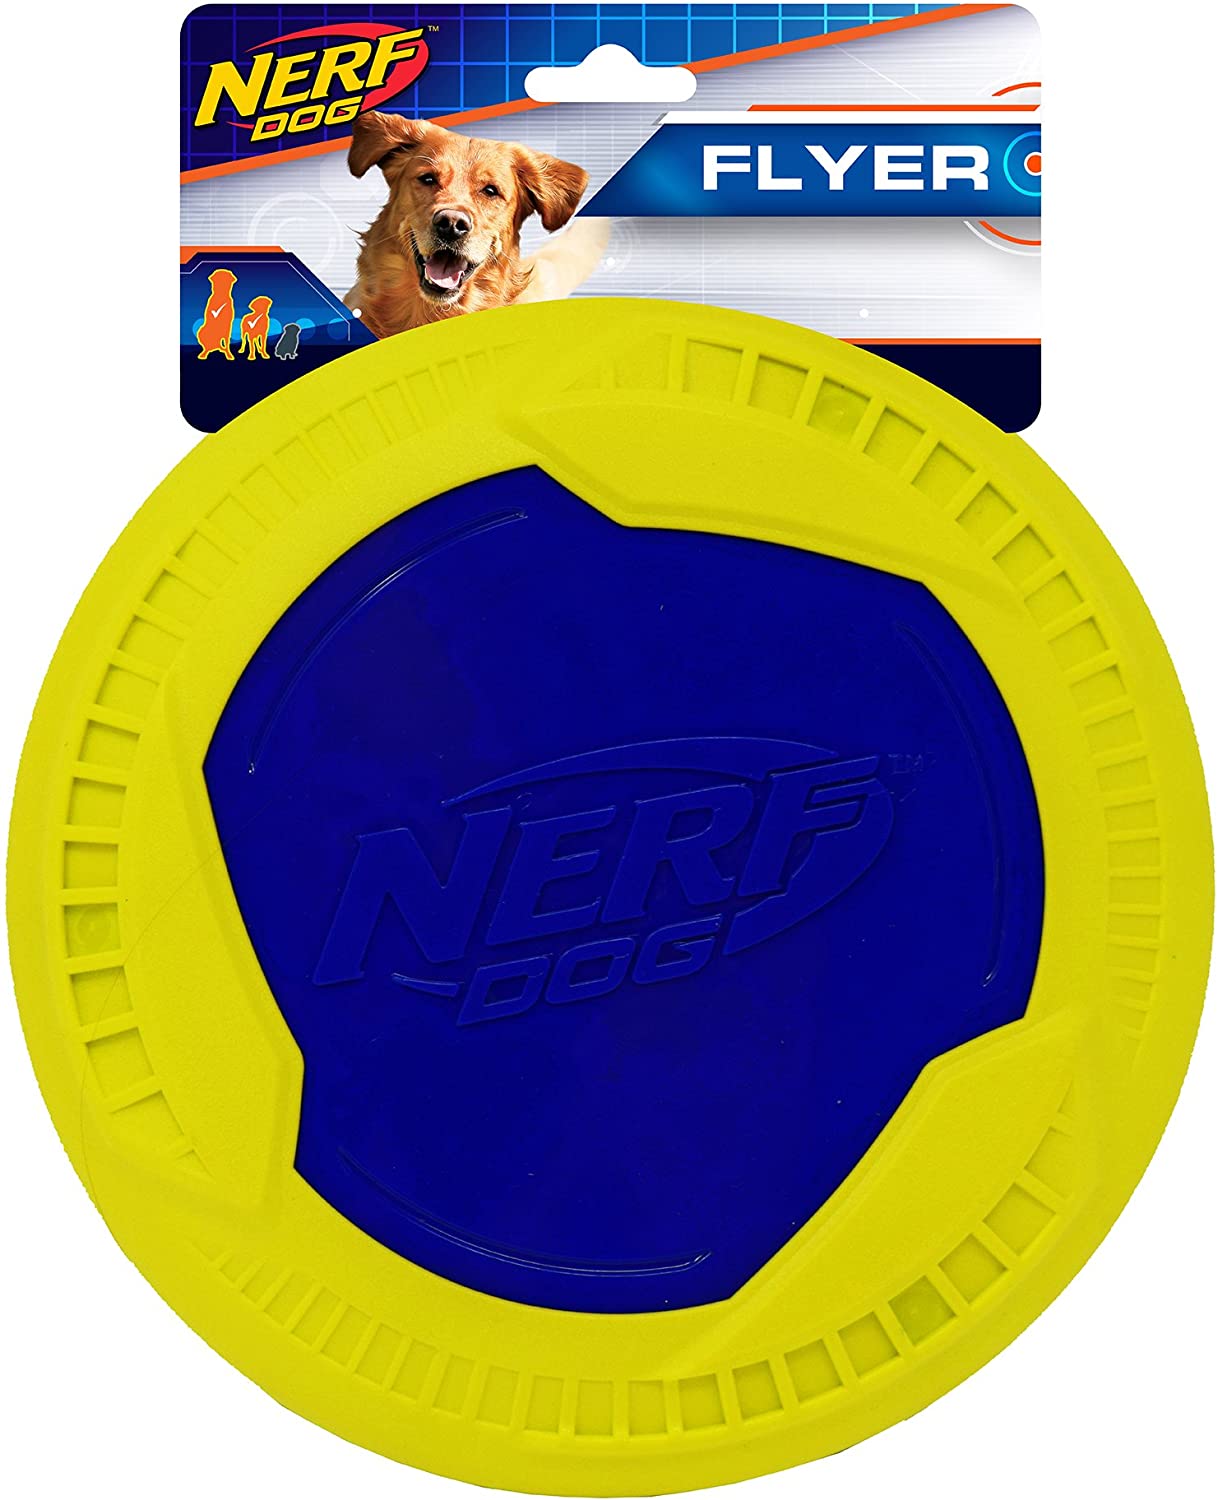 Nerf Flyer 9" Disc, Dog Toy - Medium/Large Breeds - $3.81 + FS w/ Prime